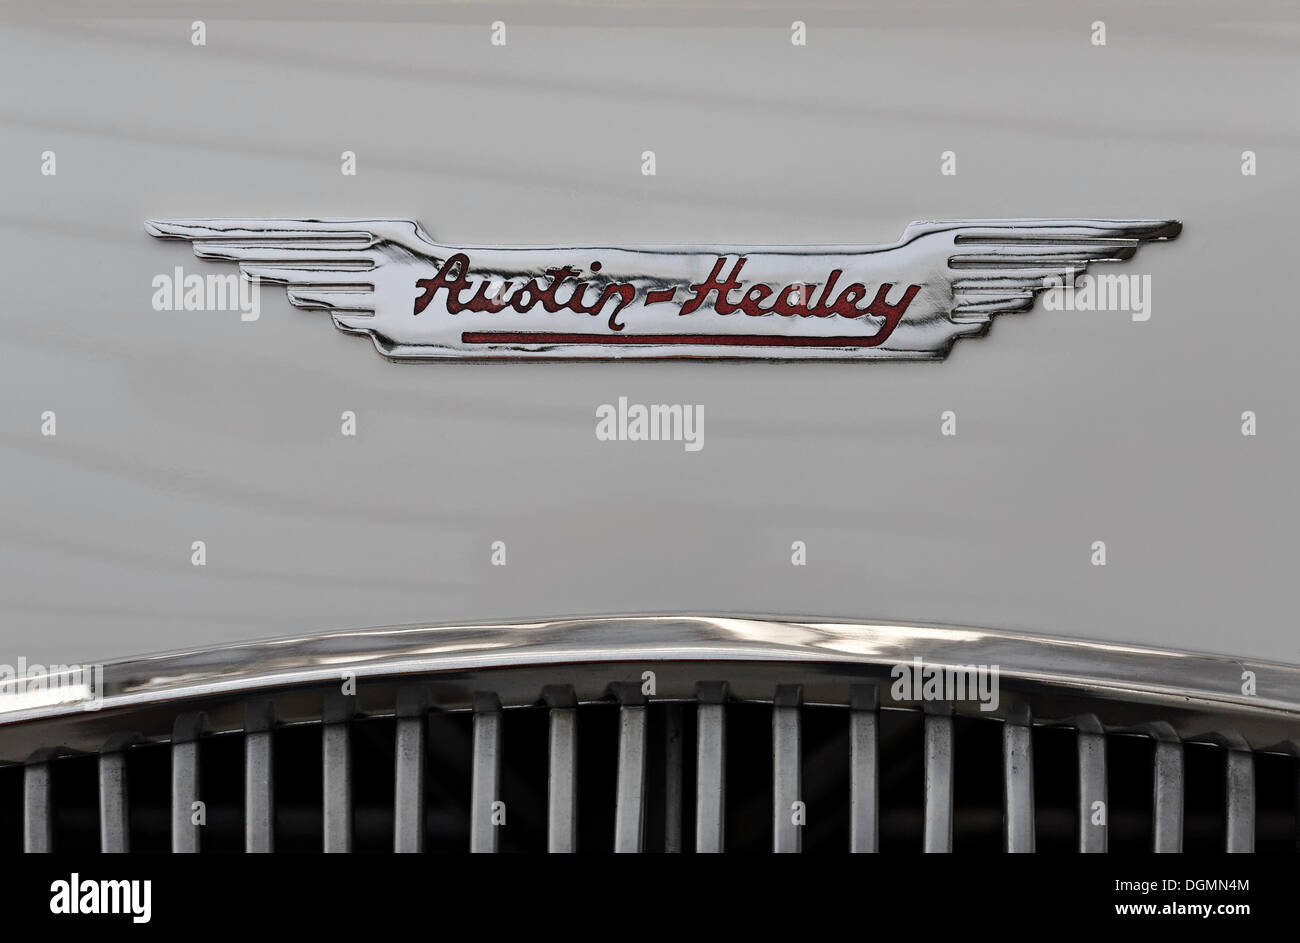 Austin-Healey logo on the hood, British car brand Stock Photo